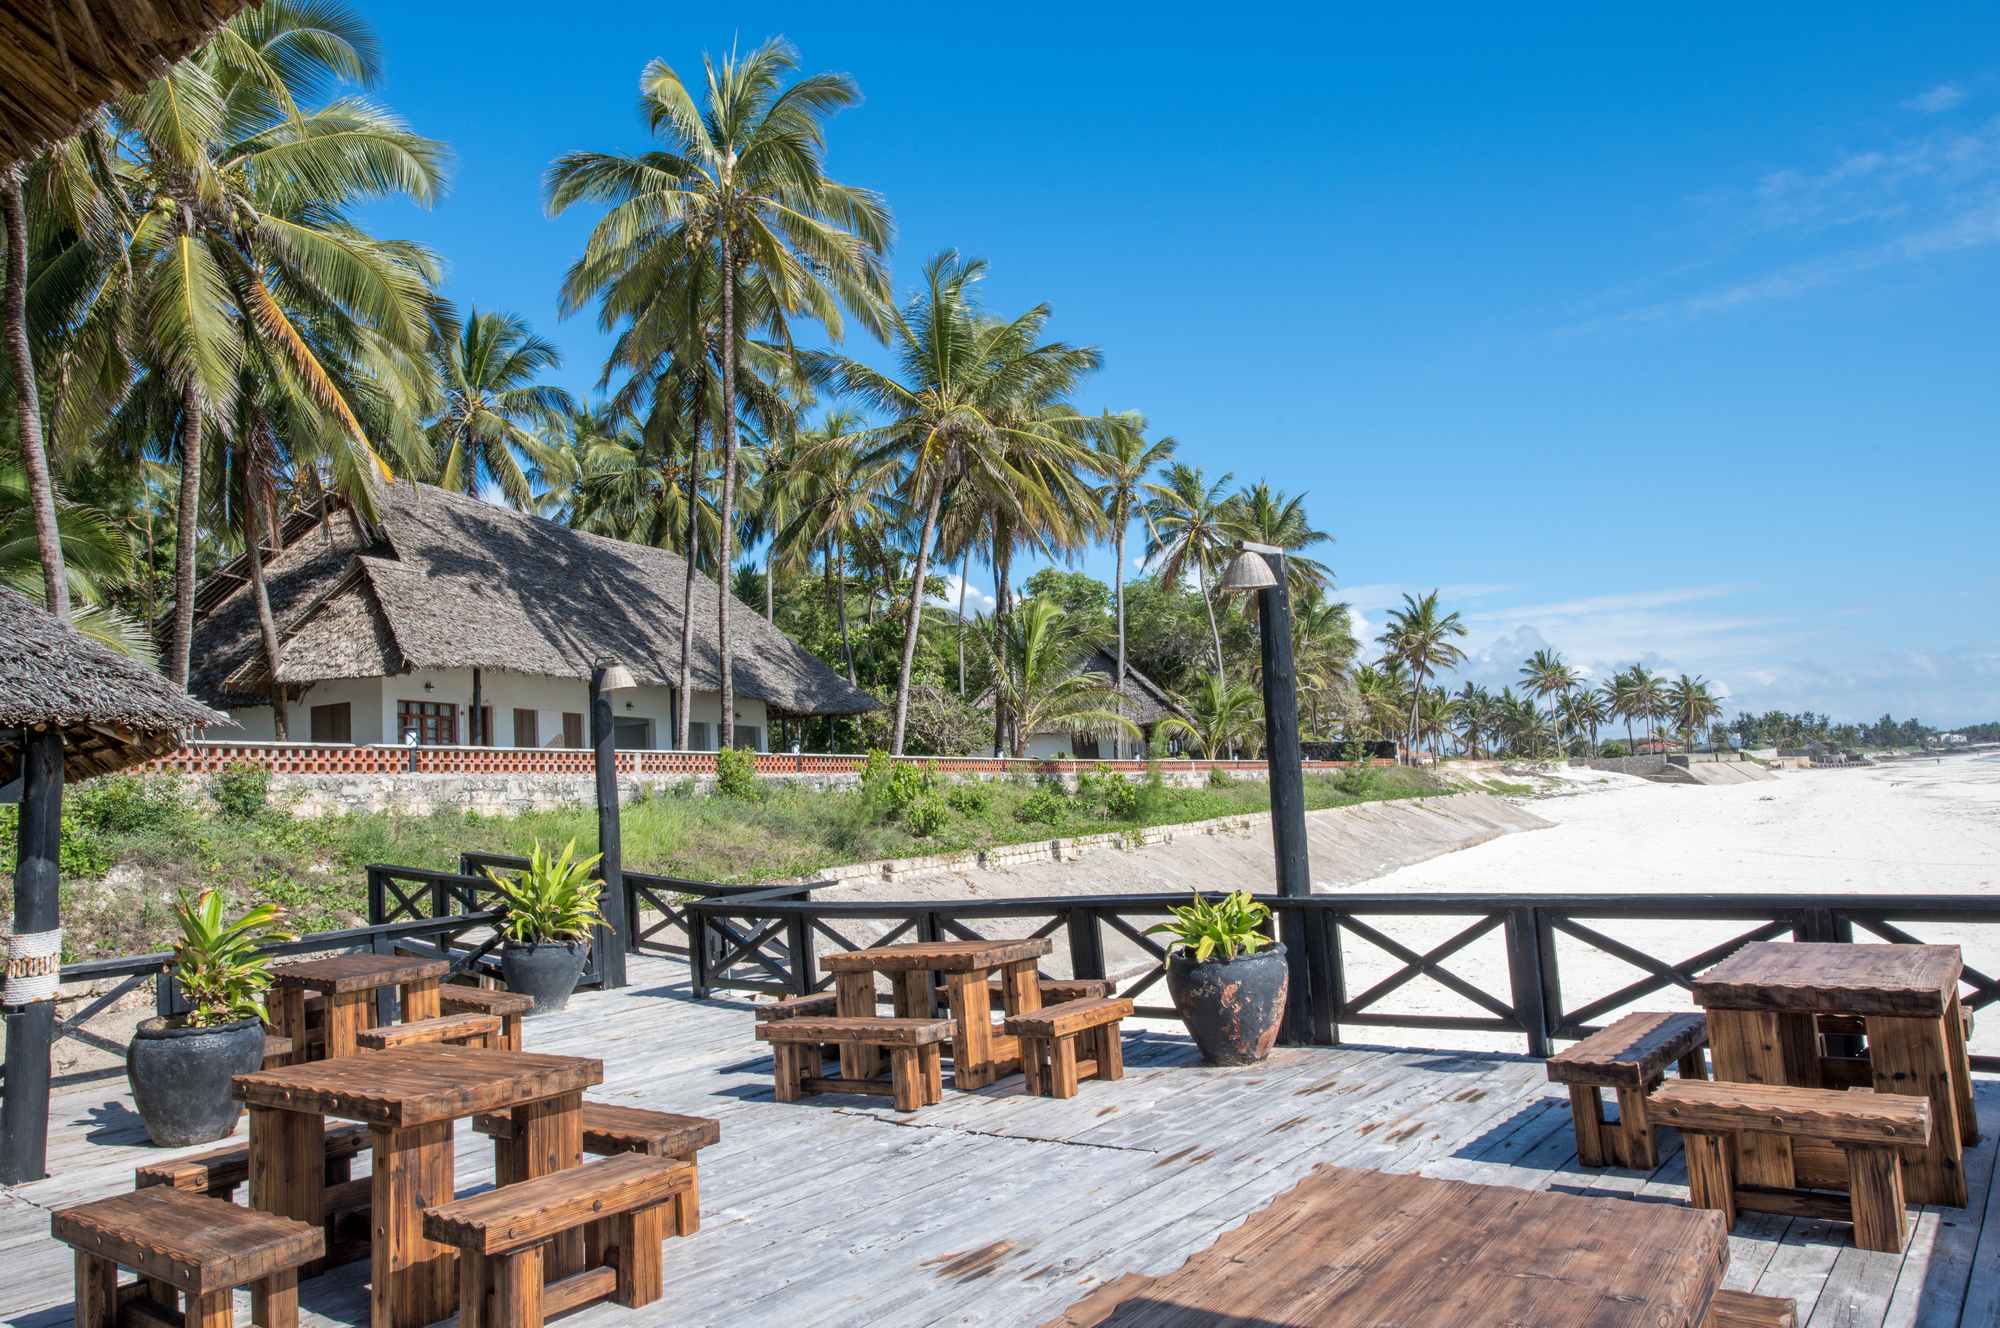 Kilifi - Beach Restaurant